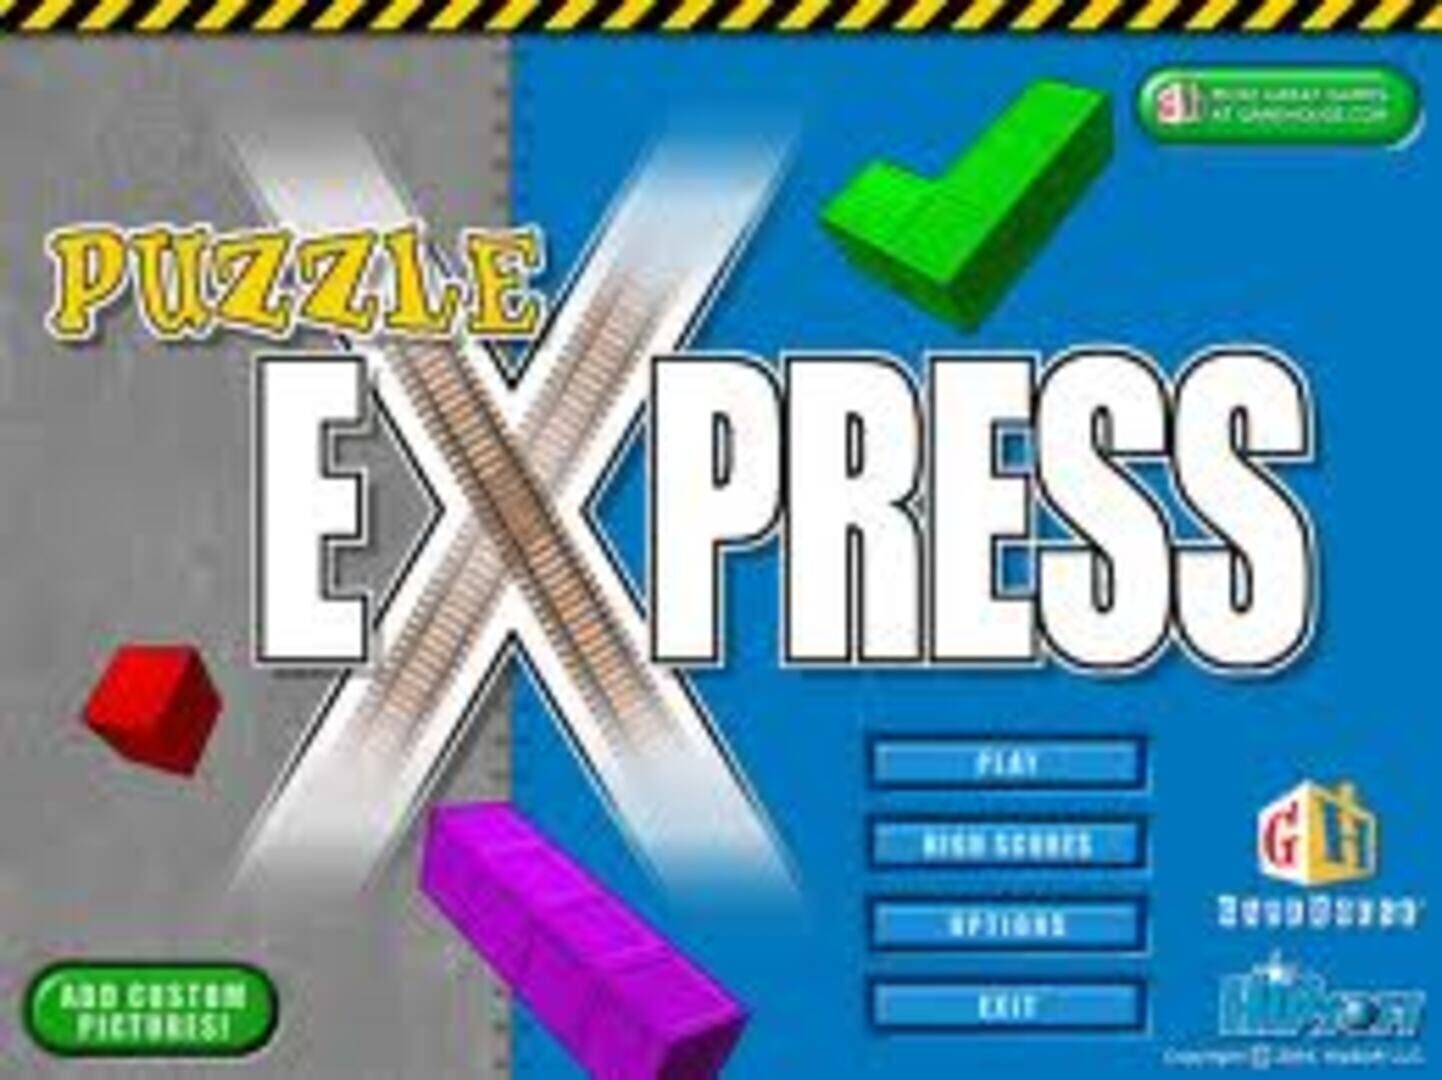 More games игры. Пазл экспресс. Холидей экспресс игра. Головоломка экспресс. Keygen Puzzle Express.